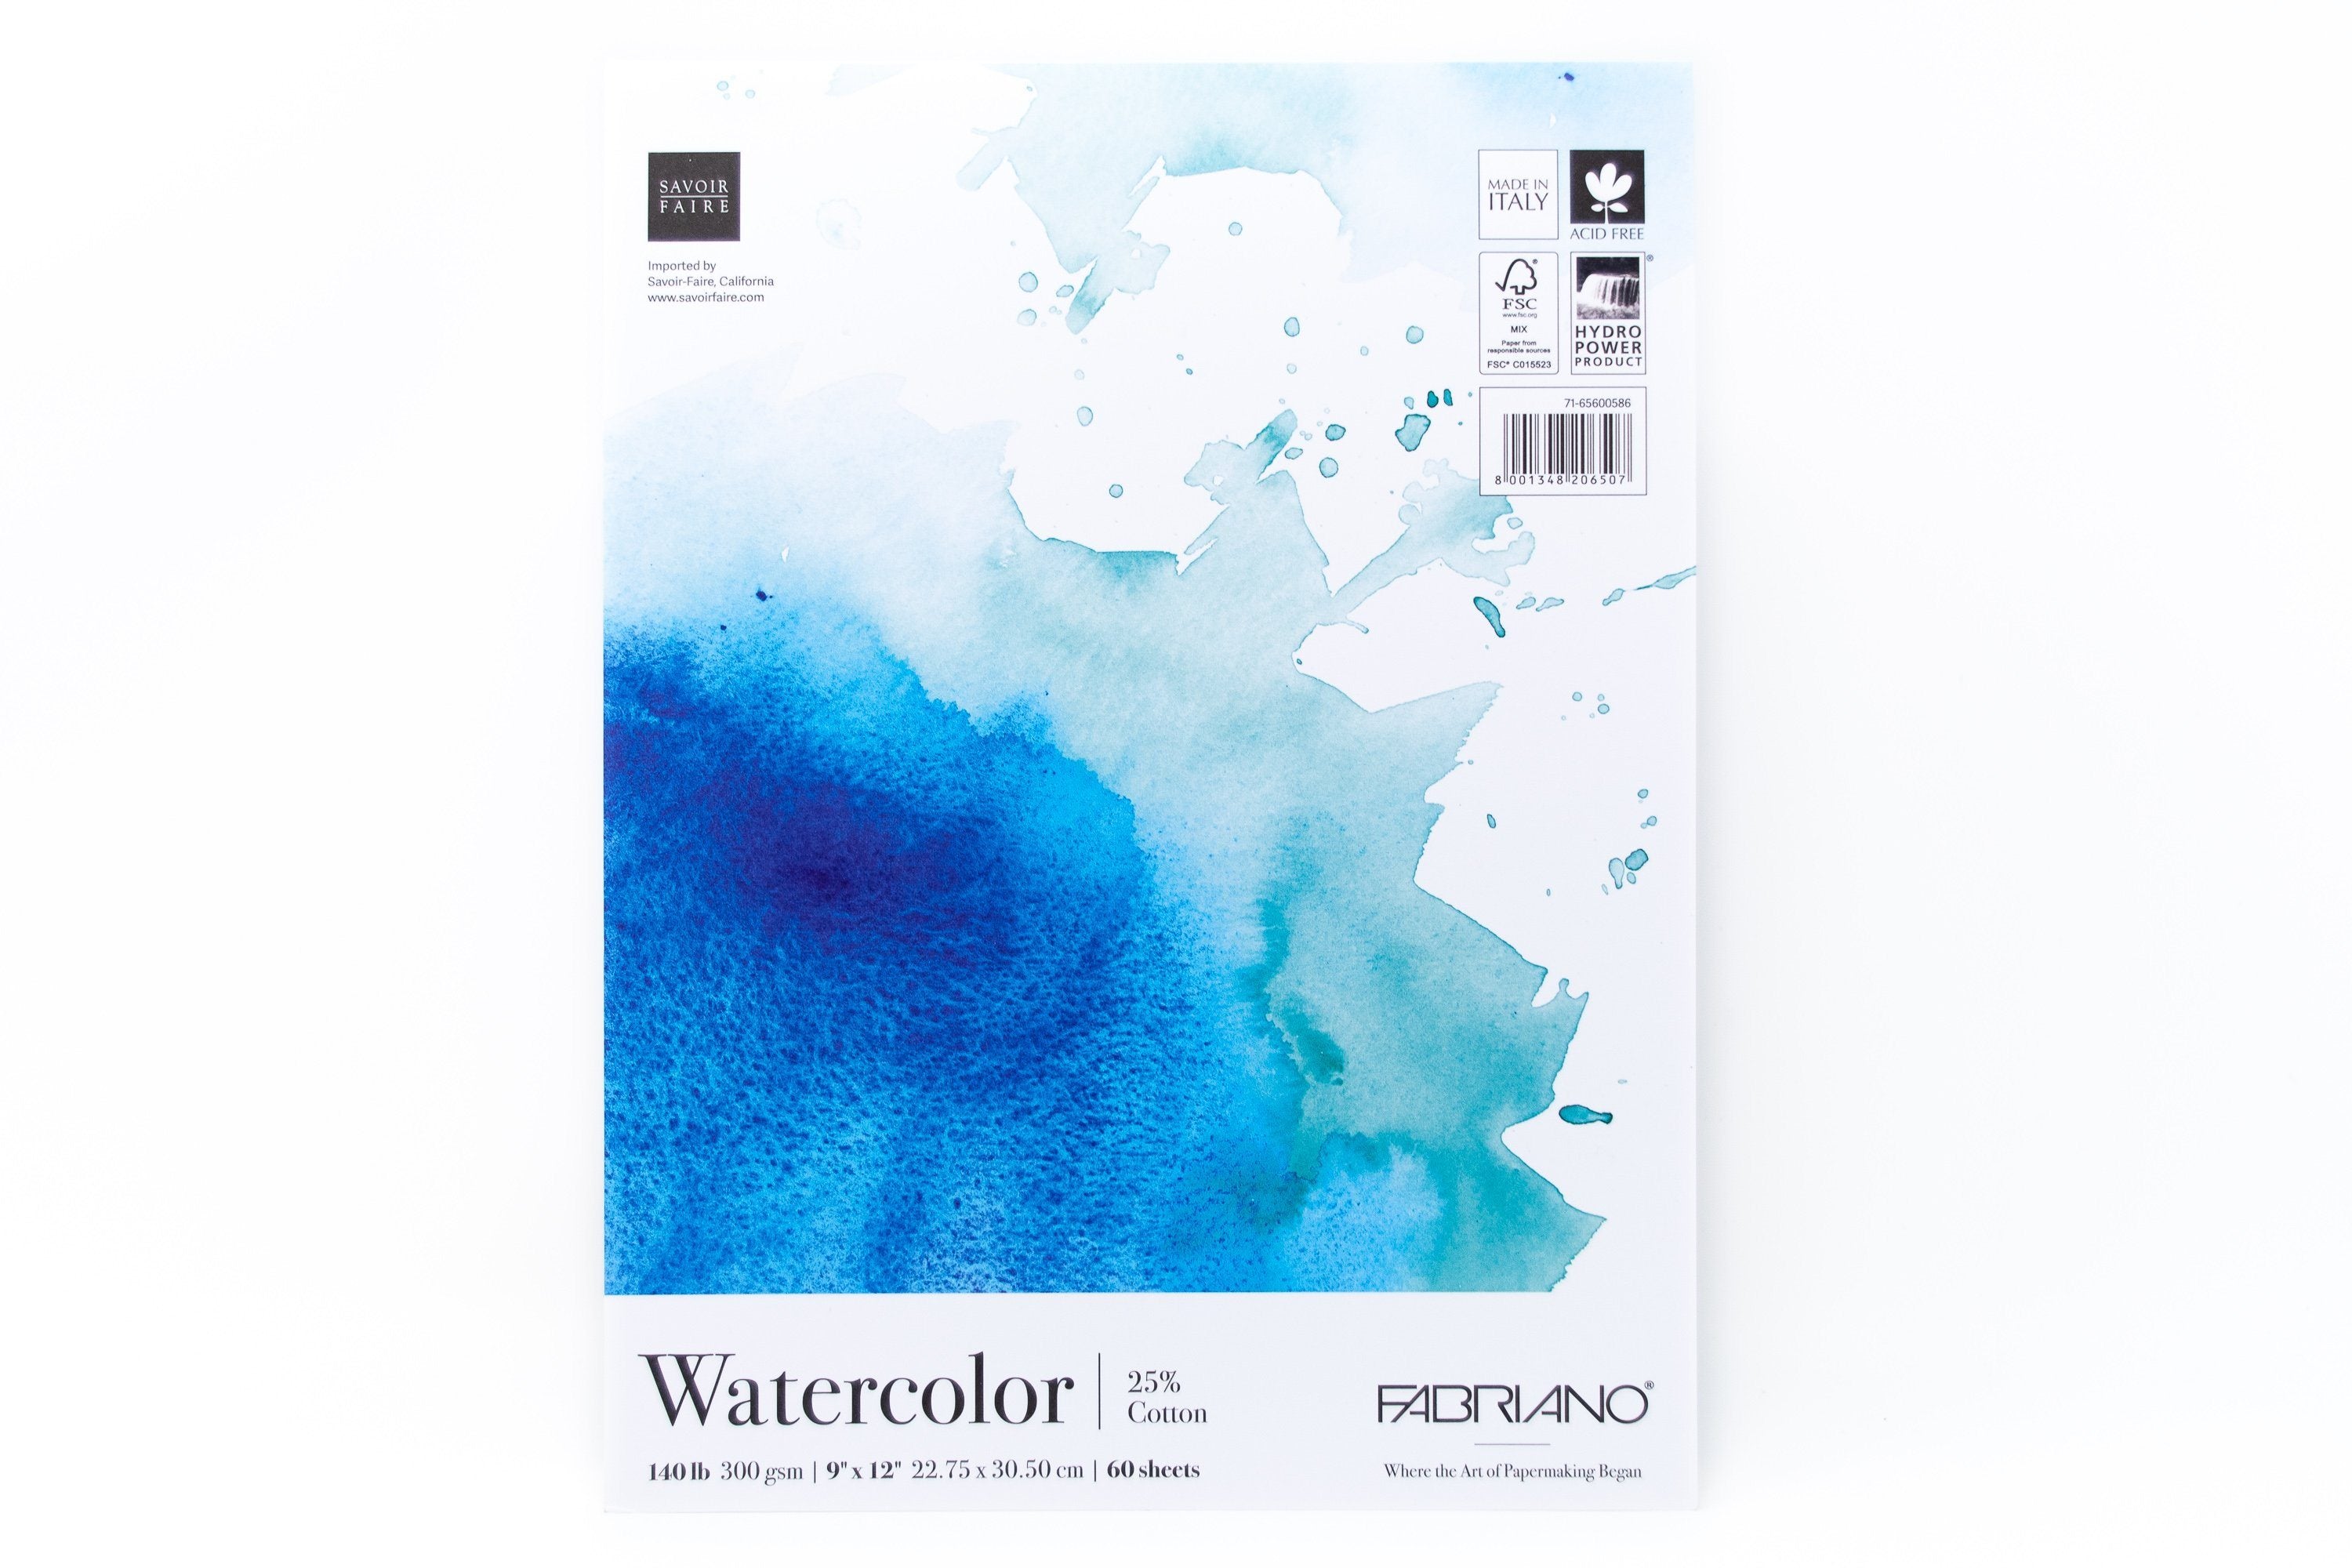 Wholesale Fabriano Studio Watercolor Pads, 25% COTTON, Postcard Size 4x6  300gsm